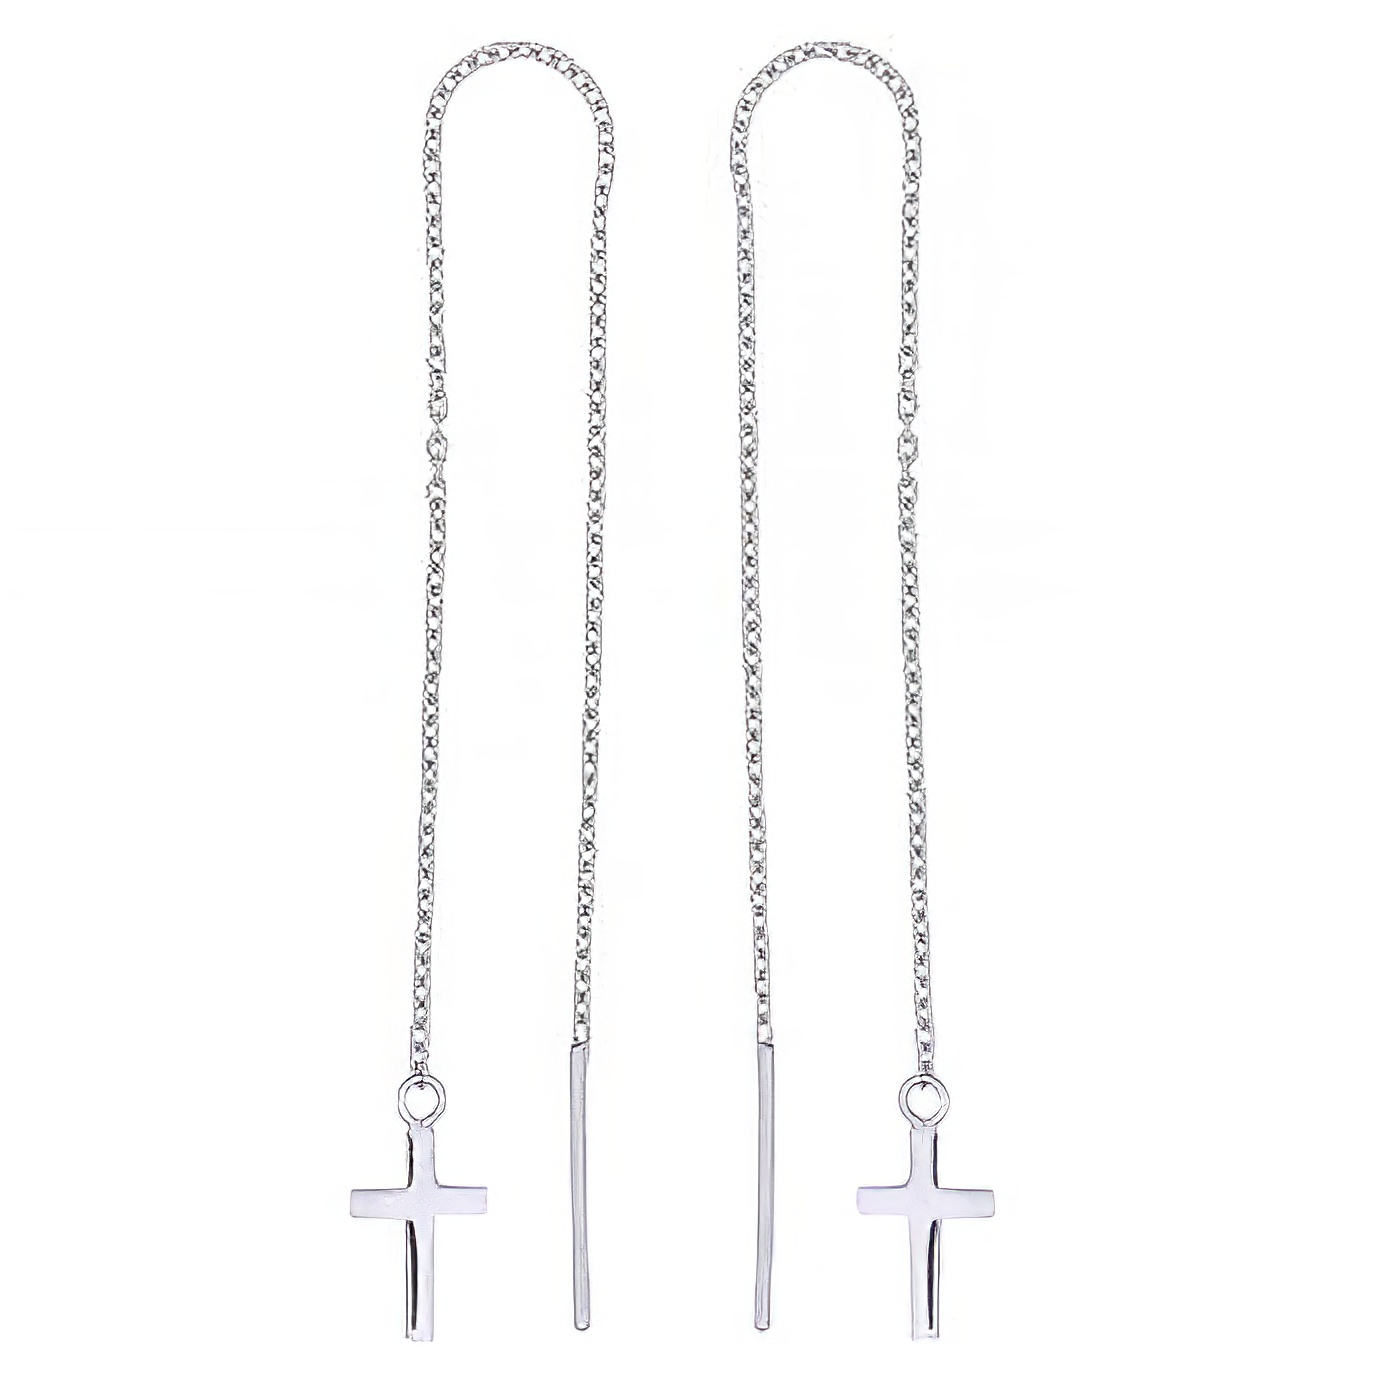 Christian Cross Sterling Silver Threader Earrings by BeYindi 